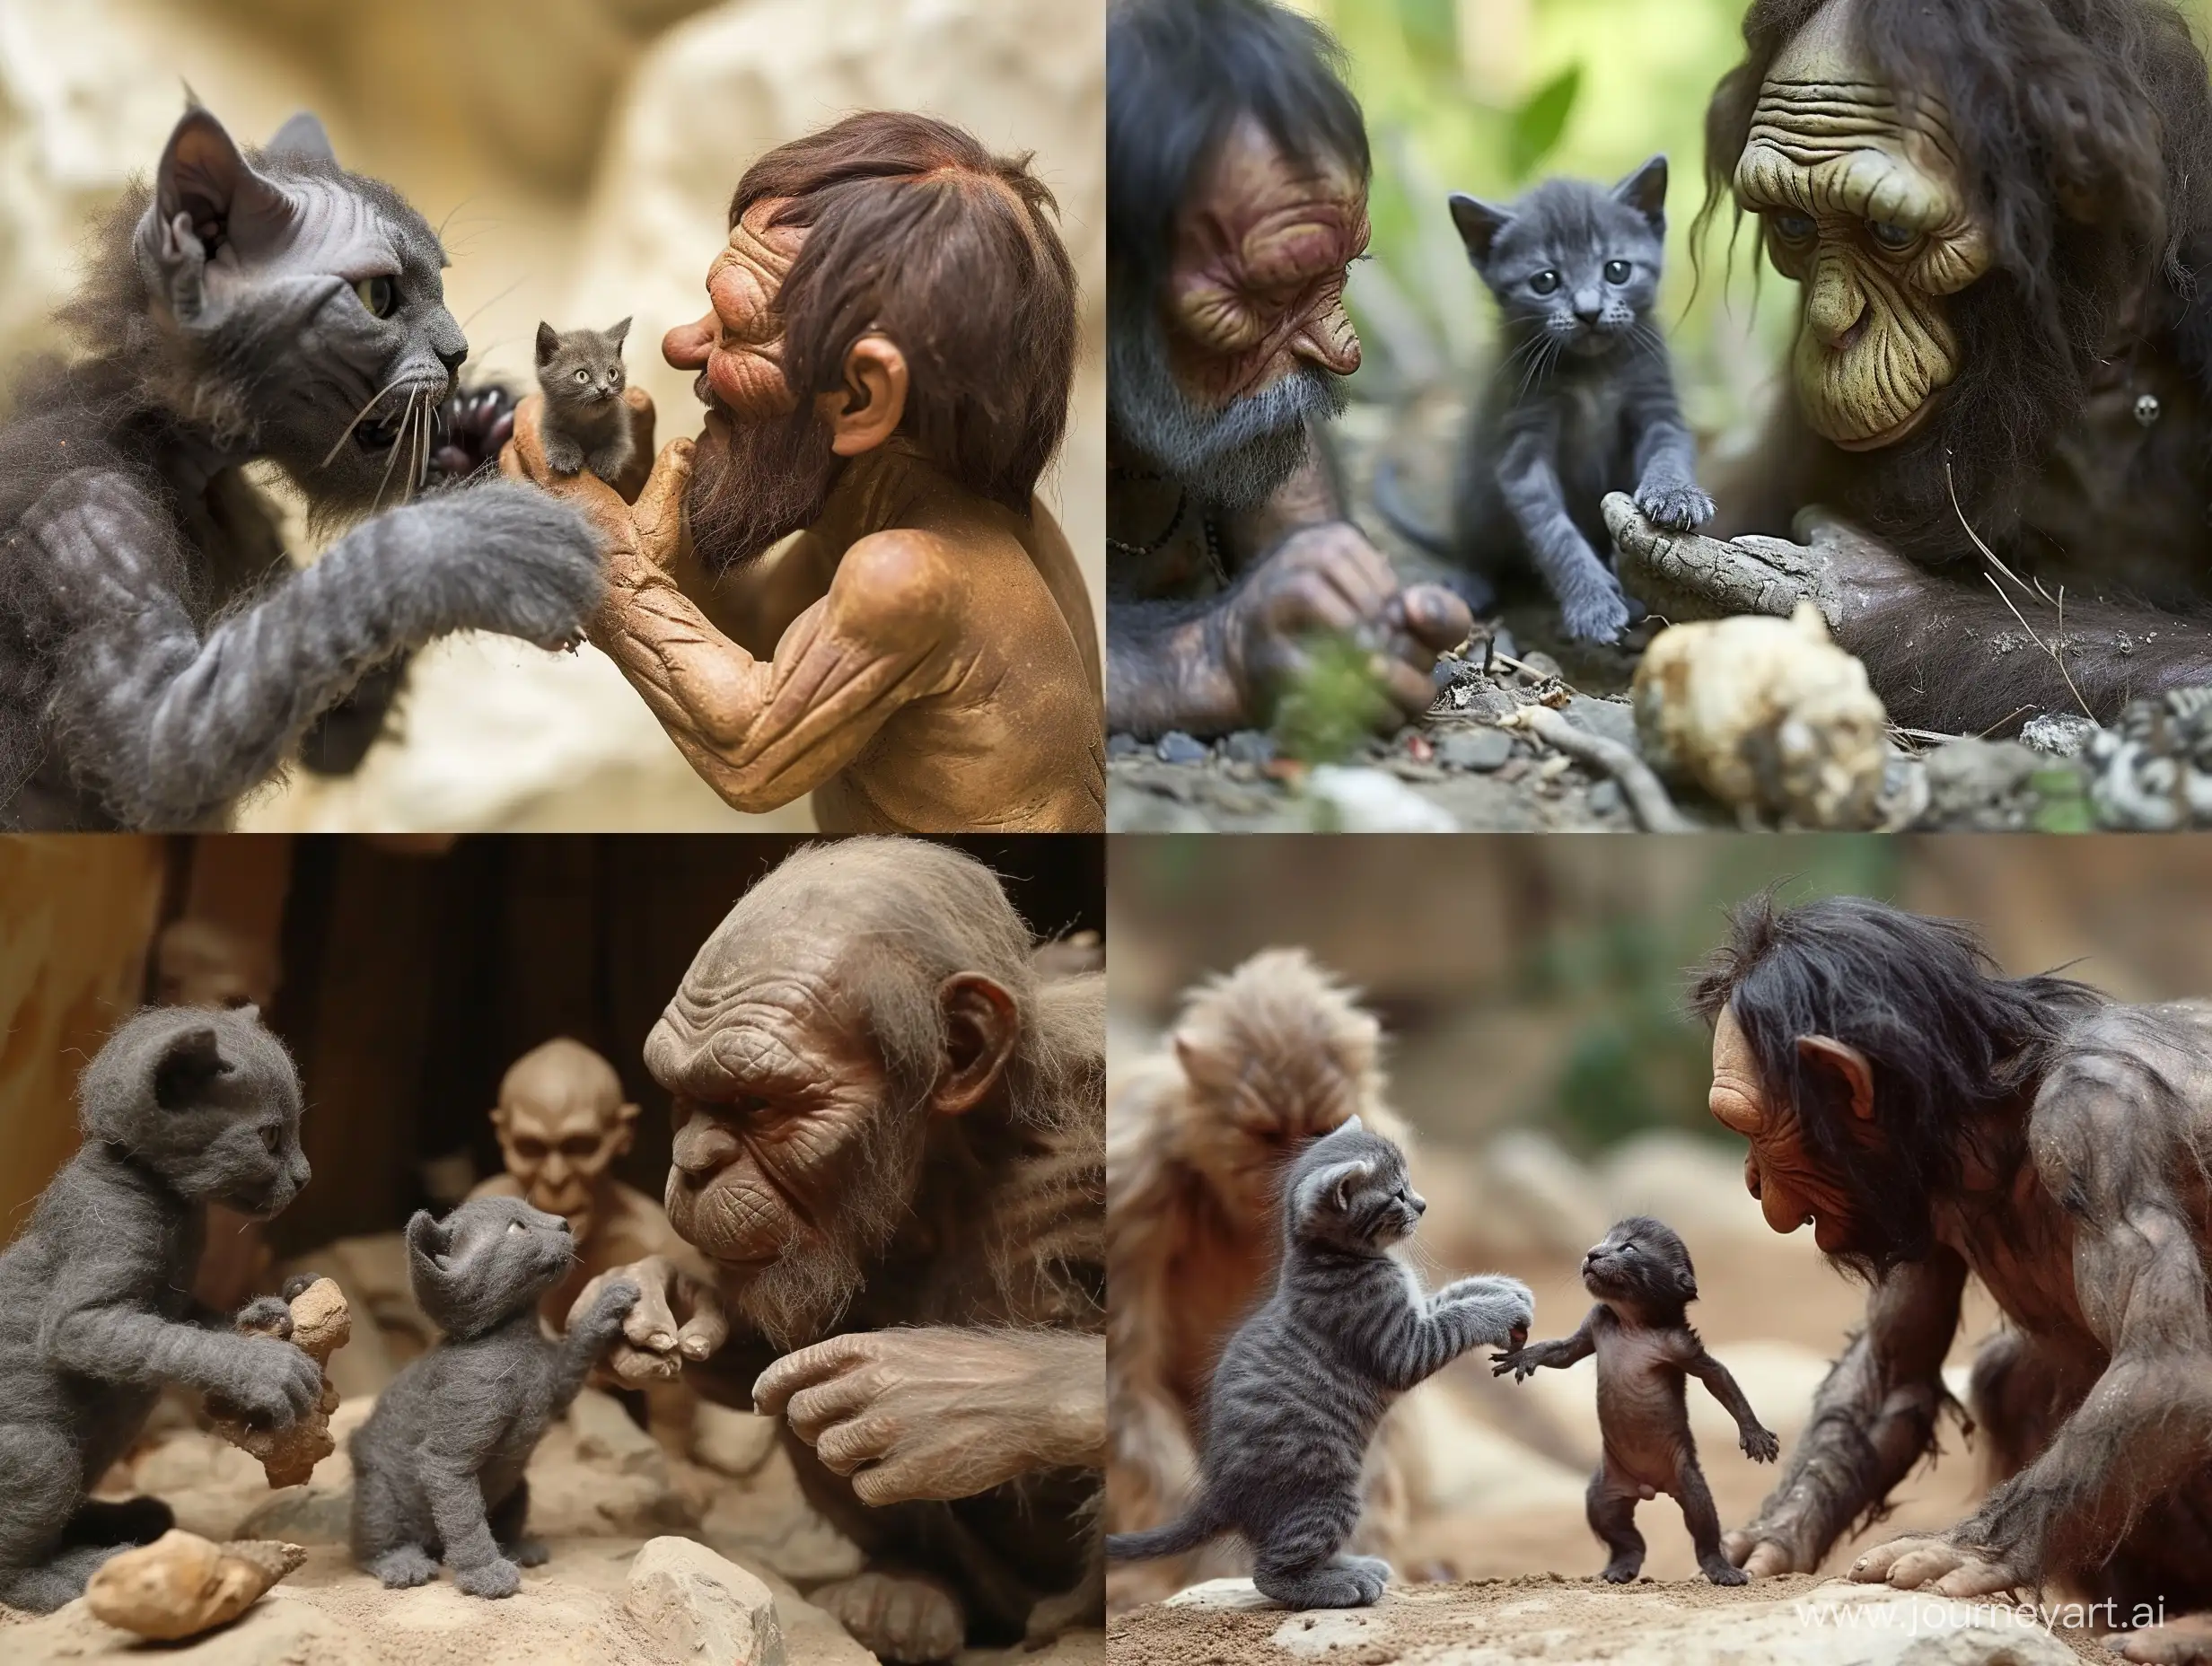 Playful-Encounter-Mischievous-Gray-Cats-vs-Neanderthals